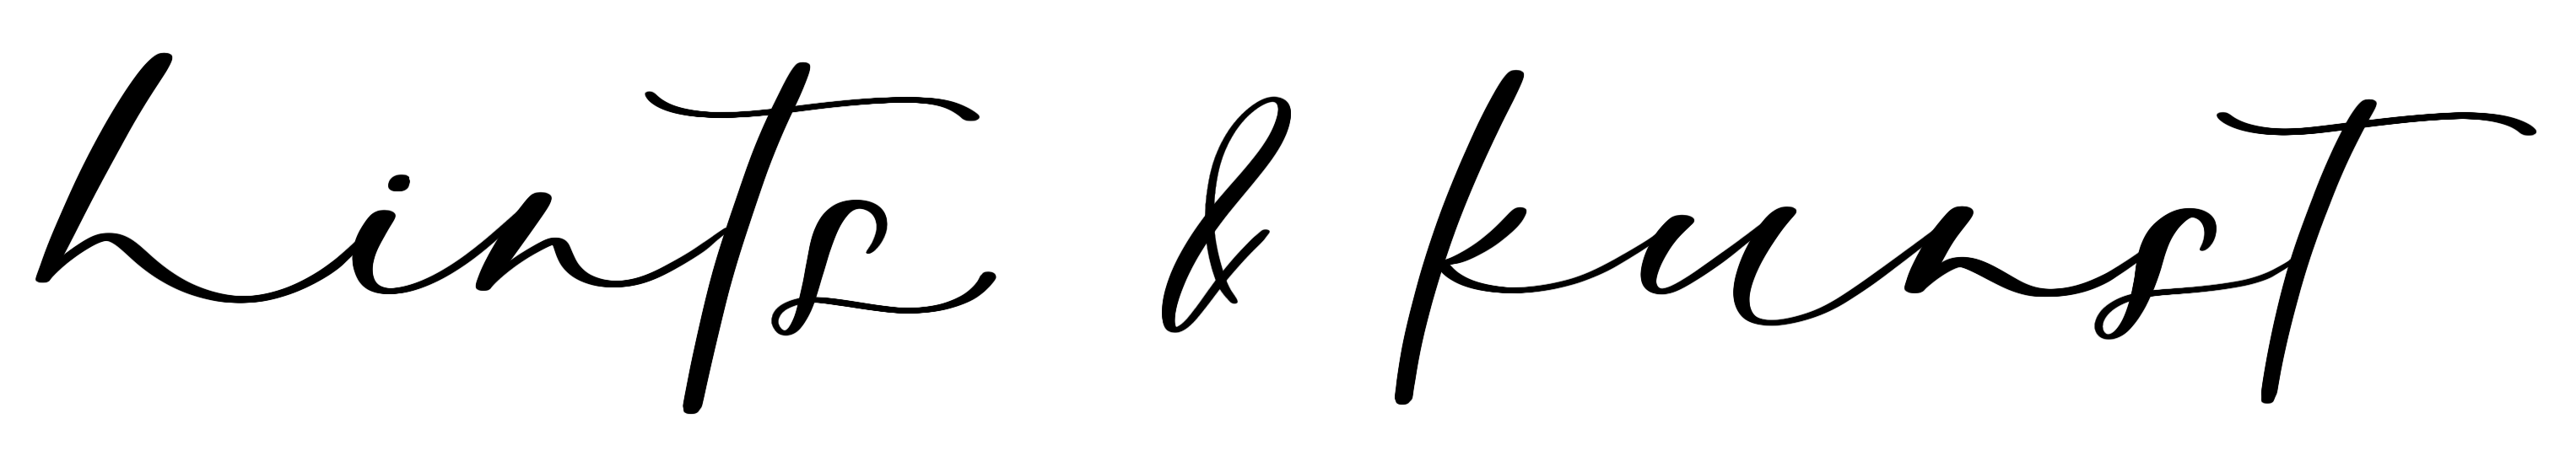 hintsundkunst_logo